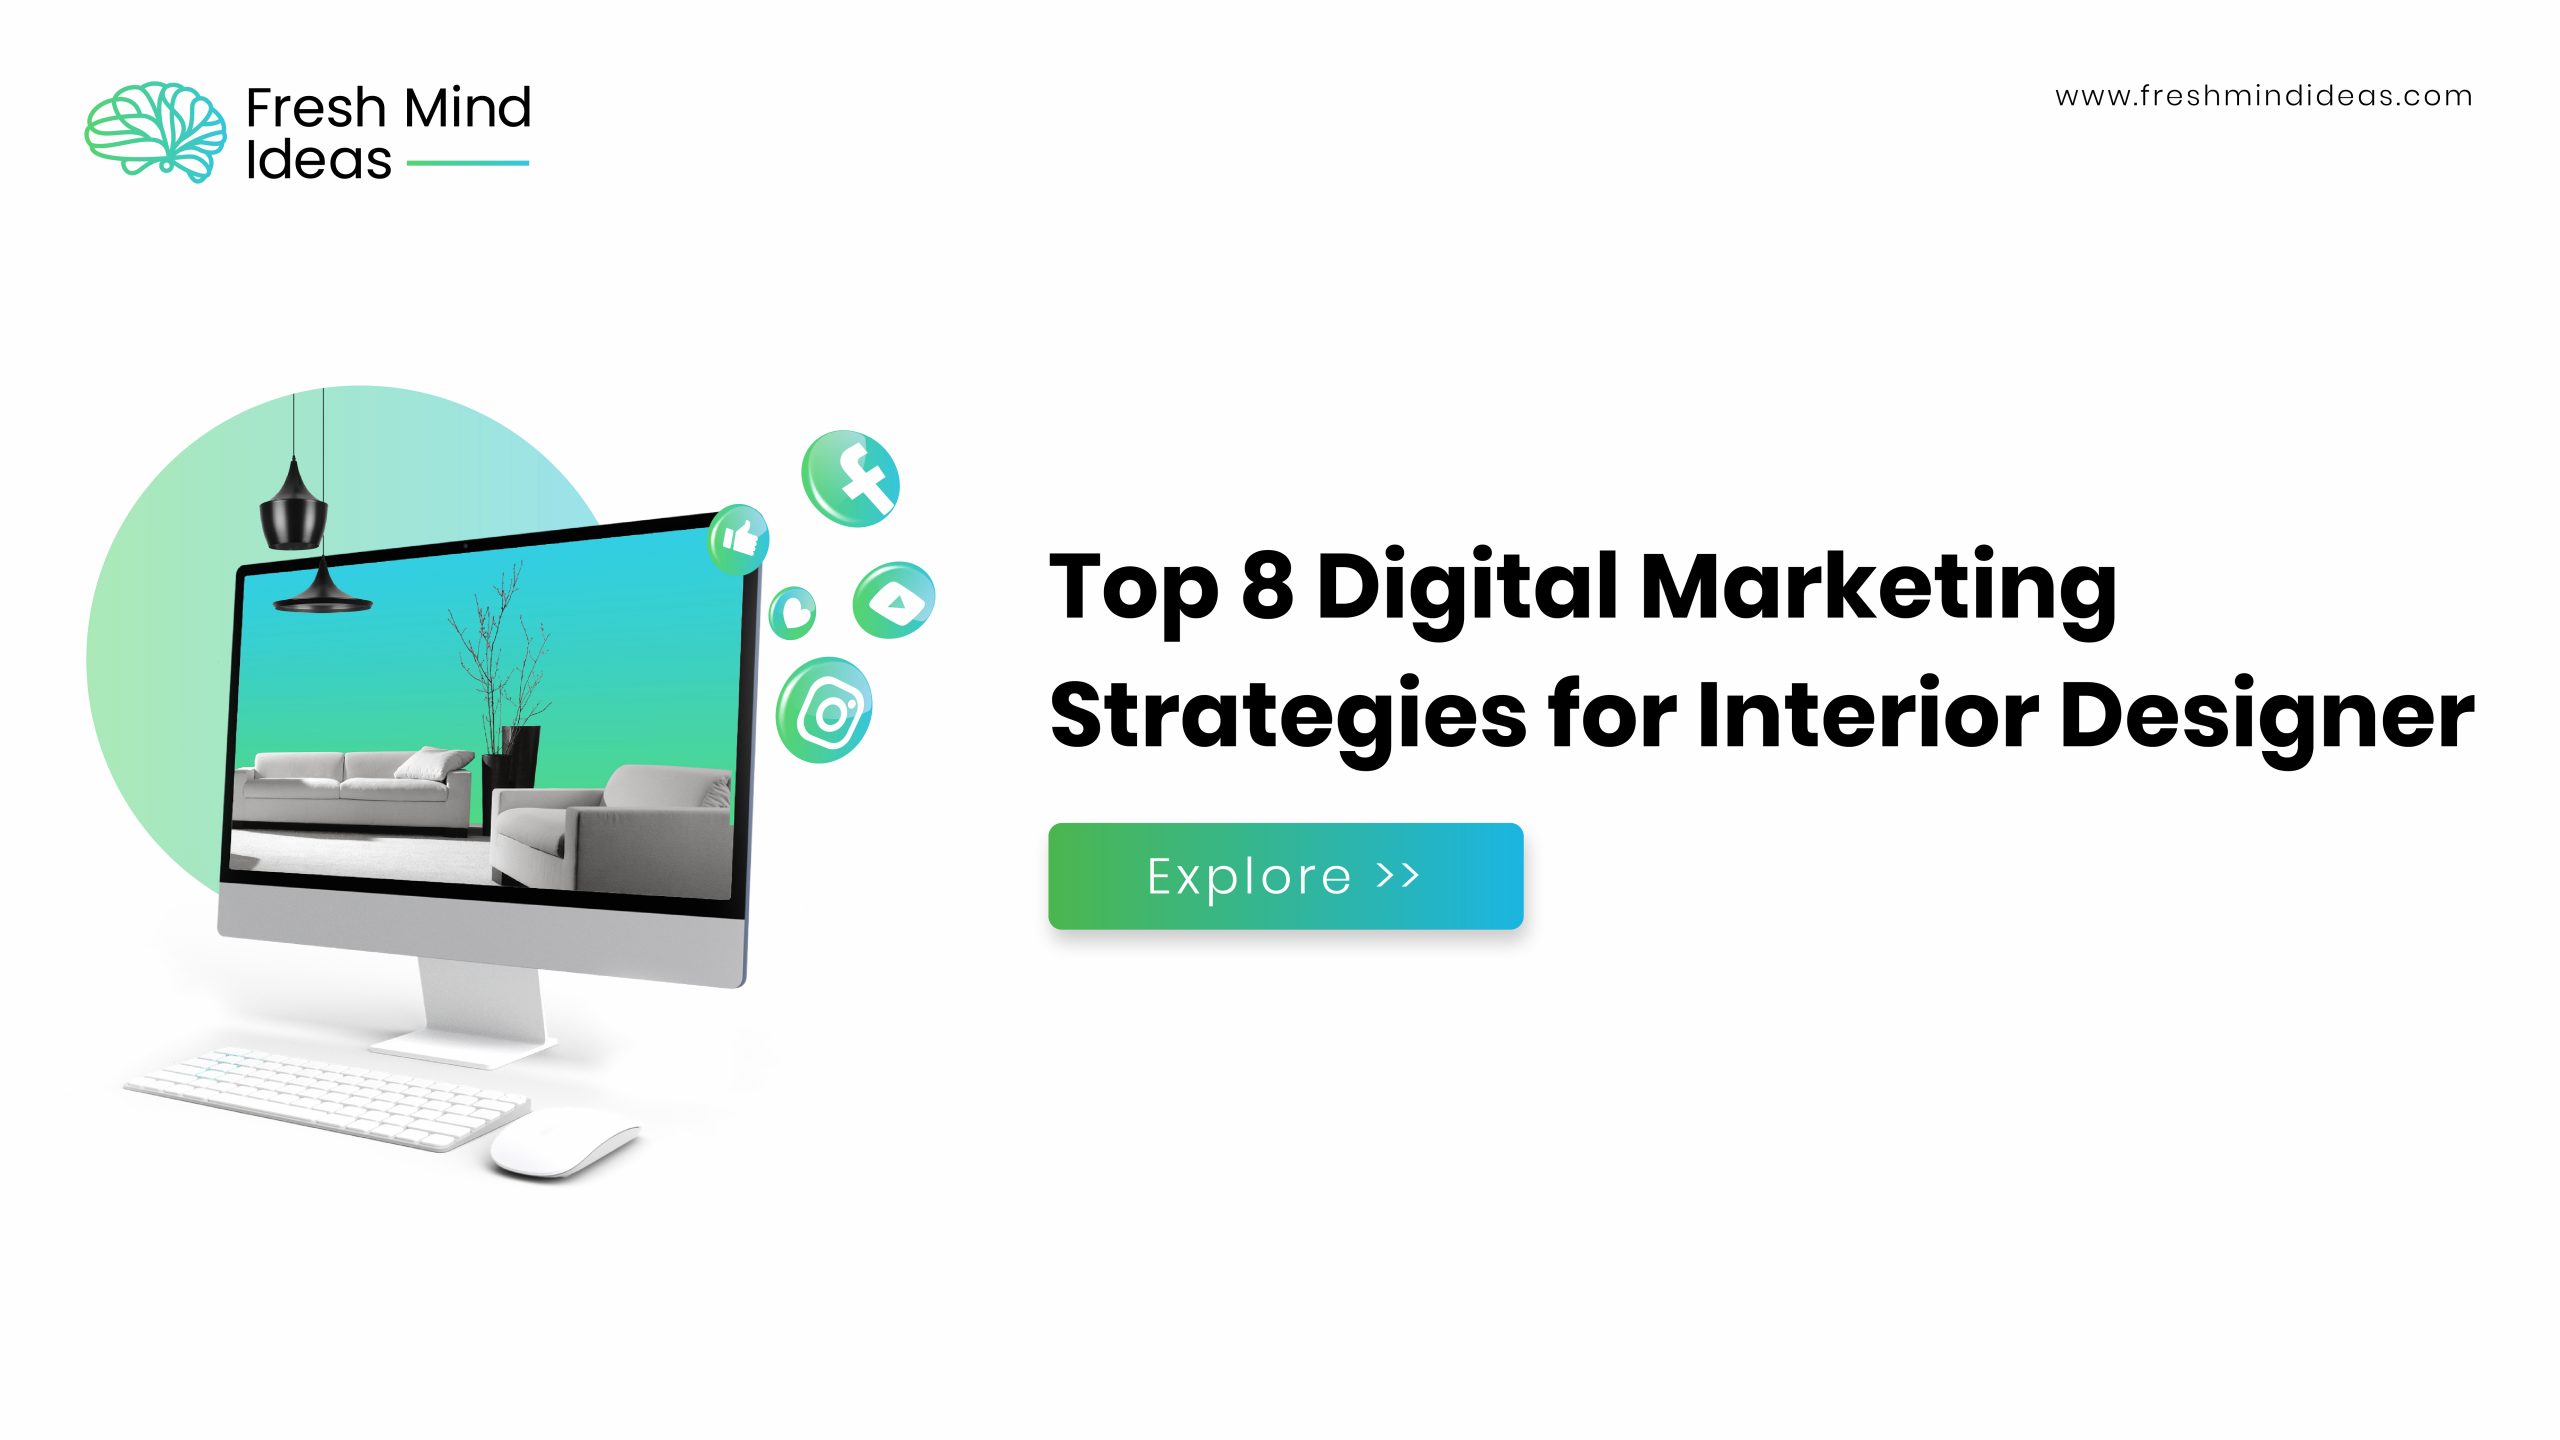 Top 8 Digital Marketing Strategies for Interior Designers